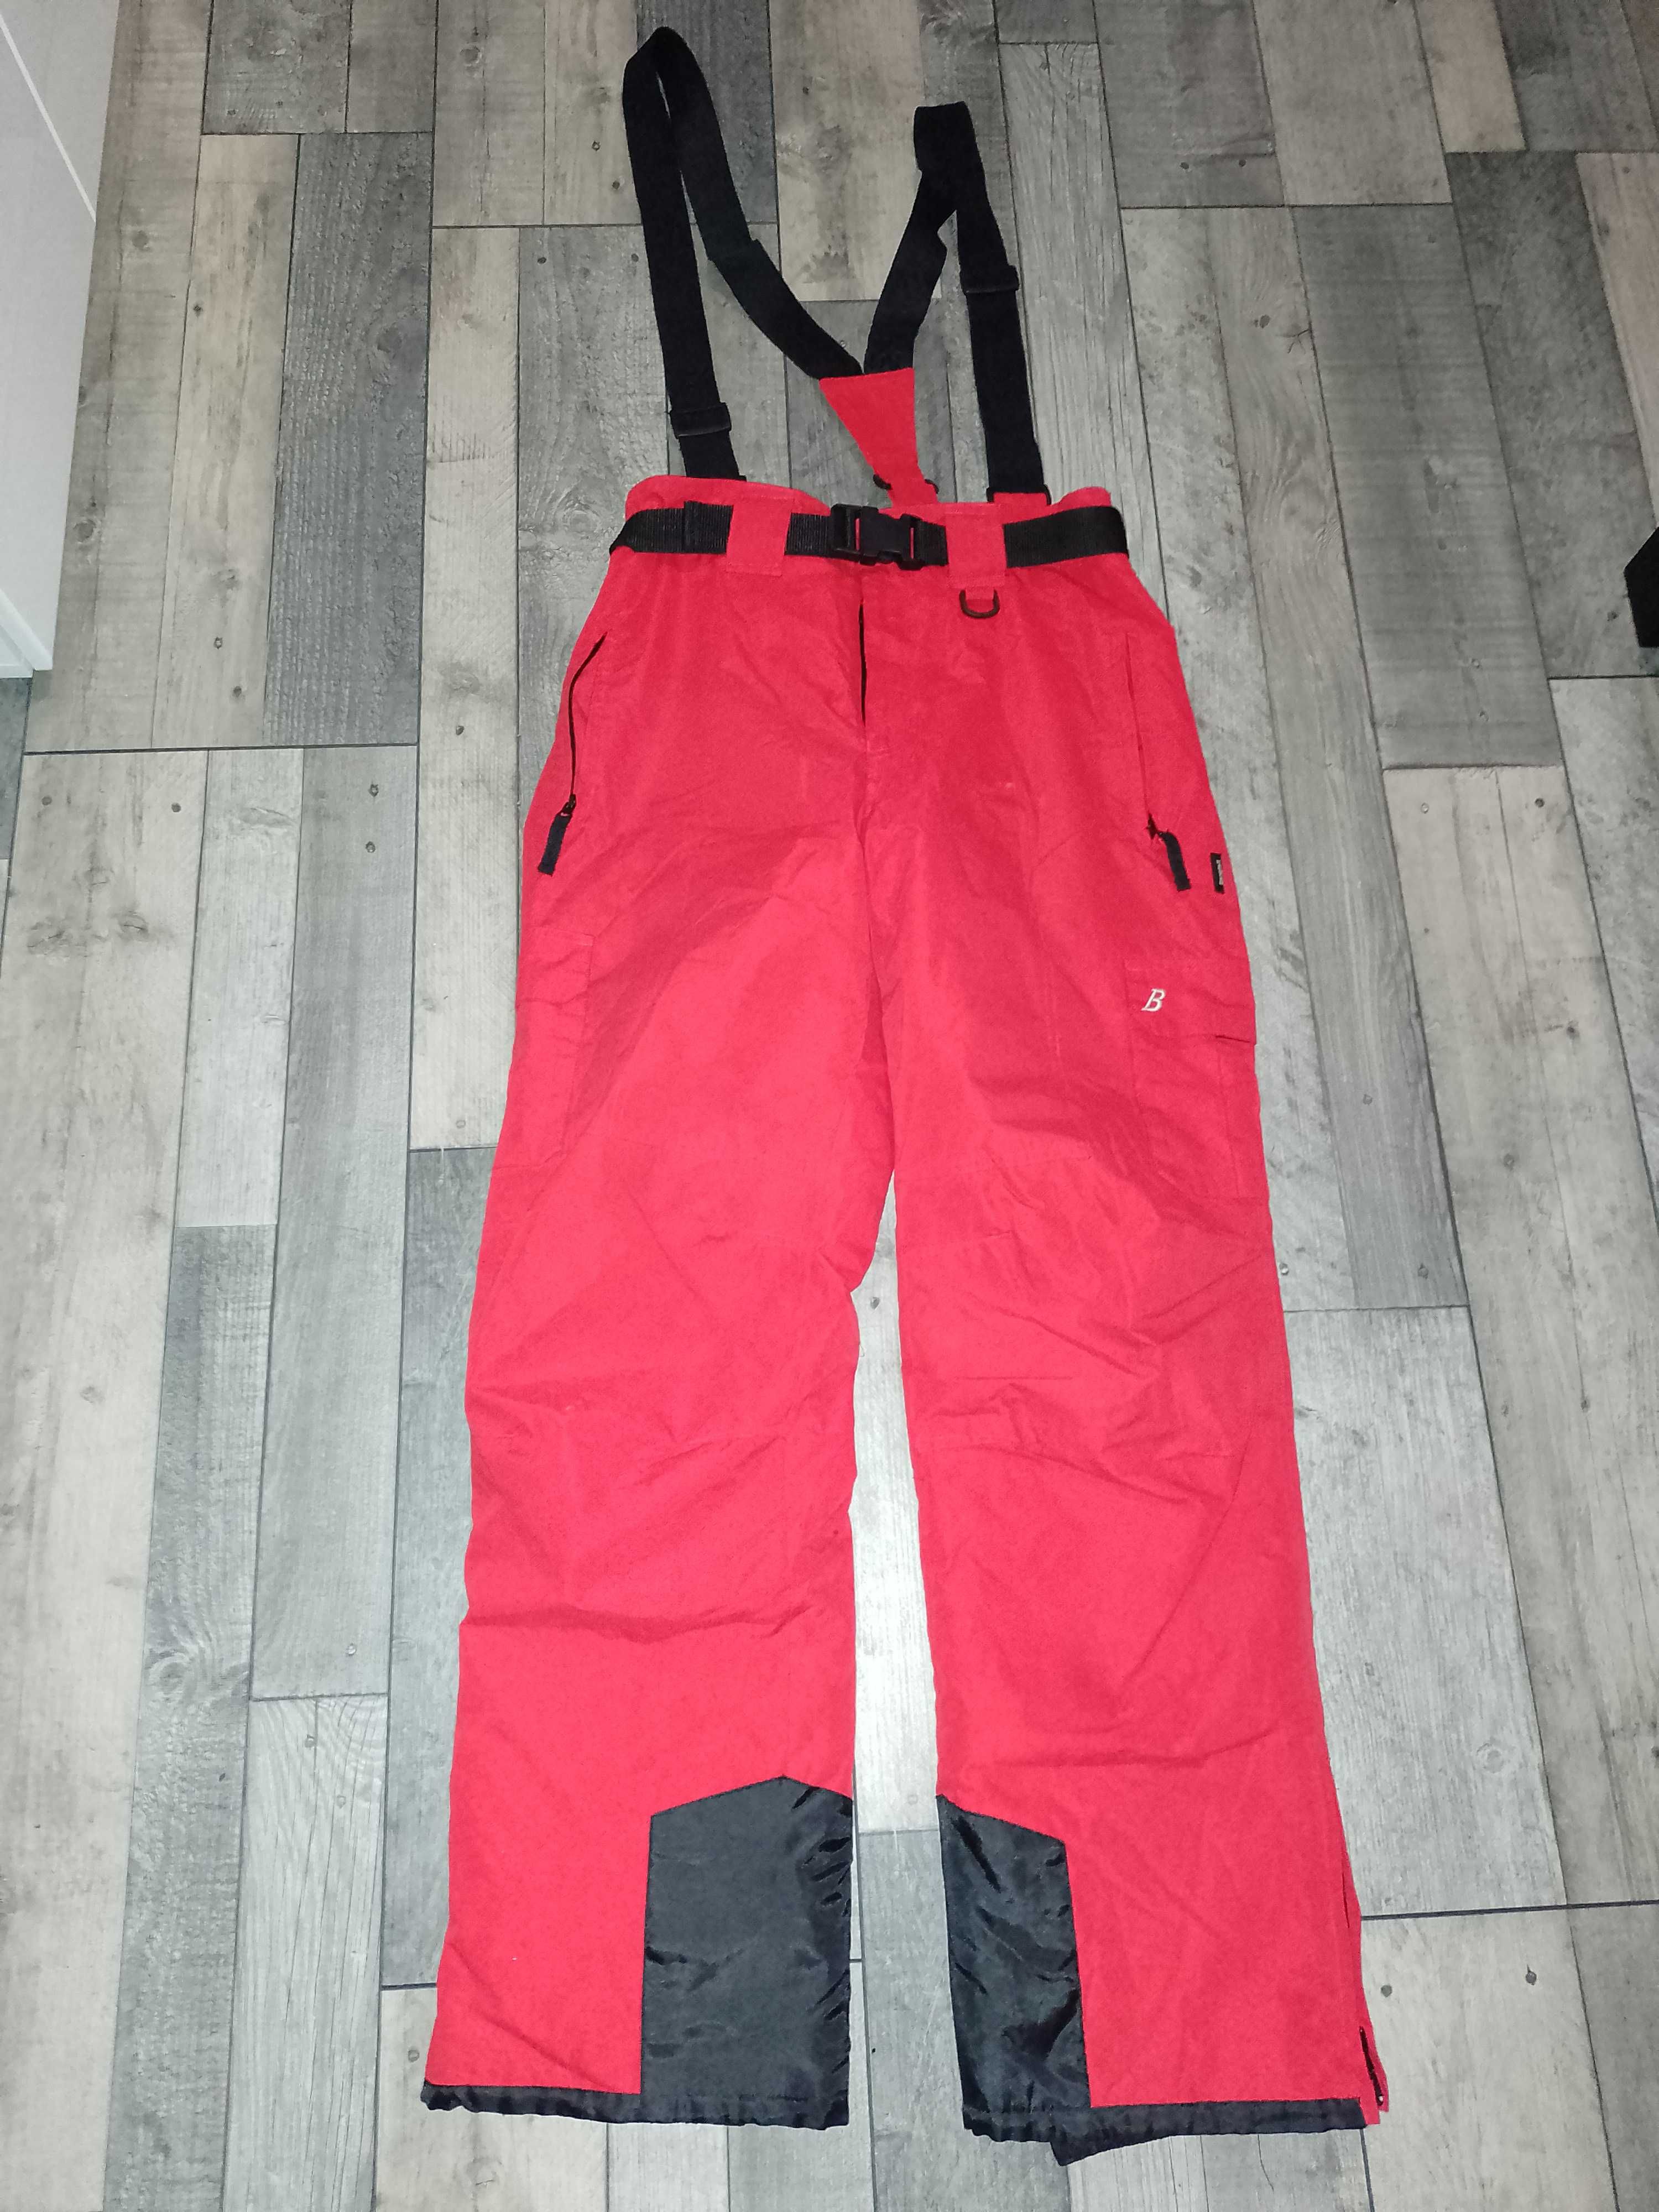 Spodnie narciarskie męskie rozmiar M / L